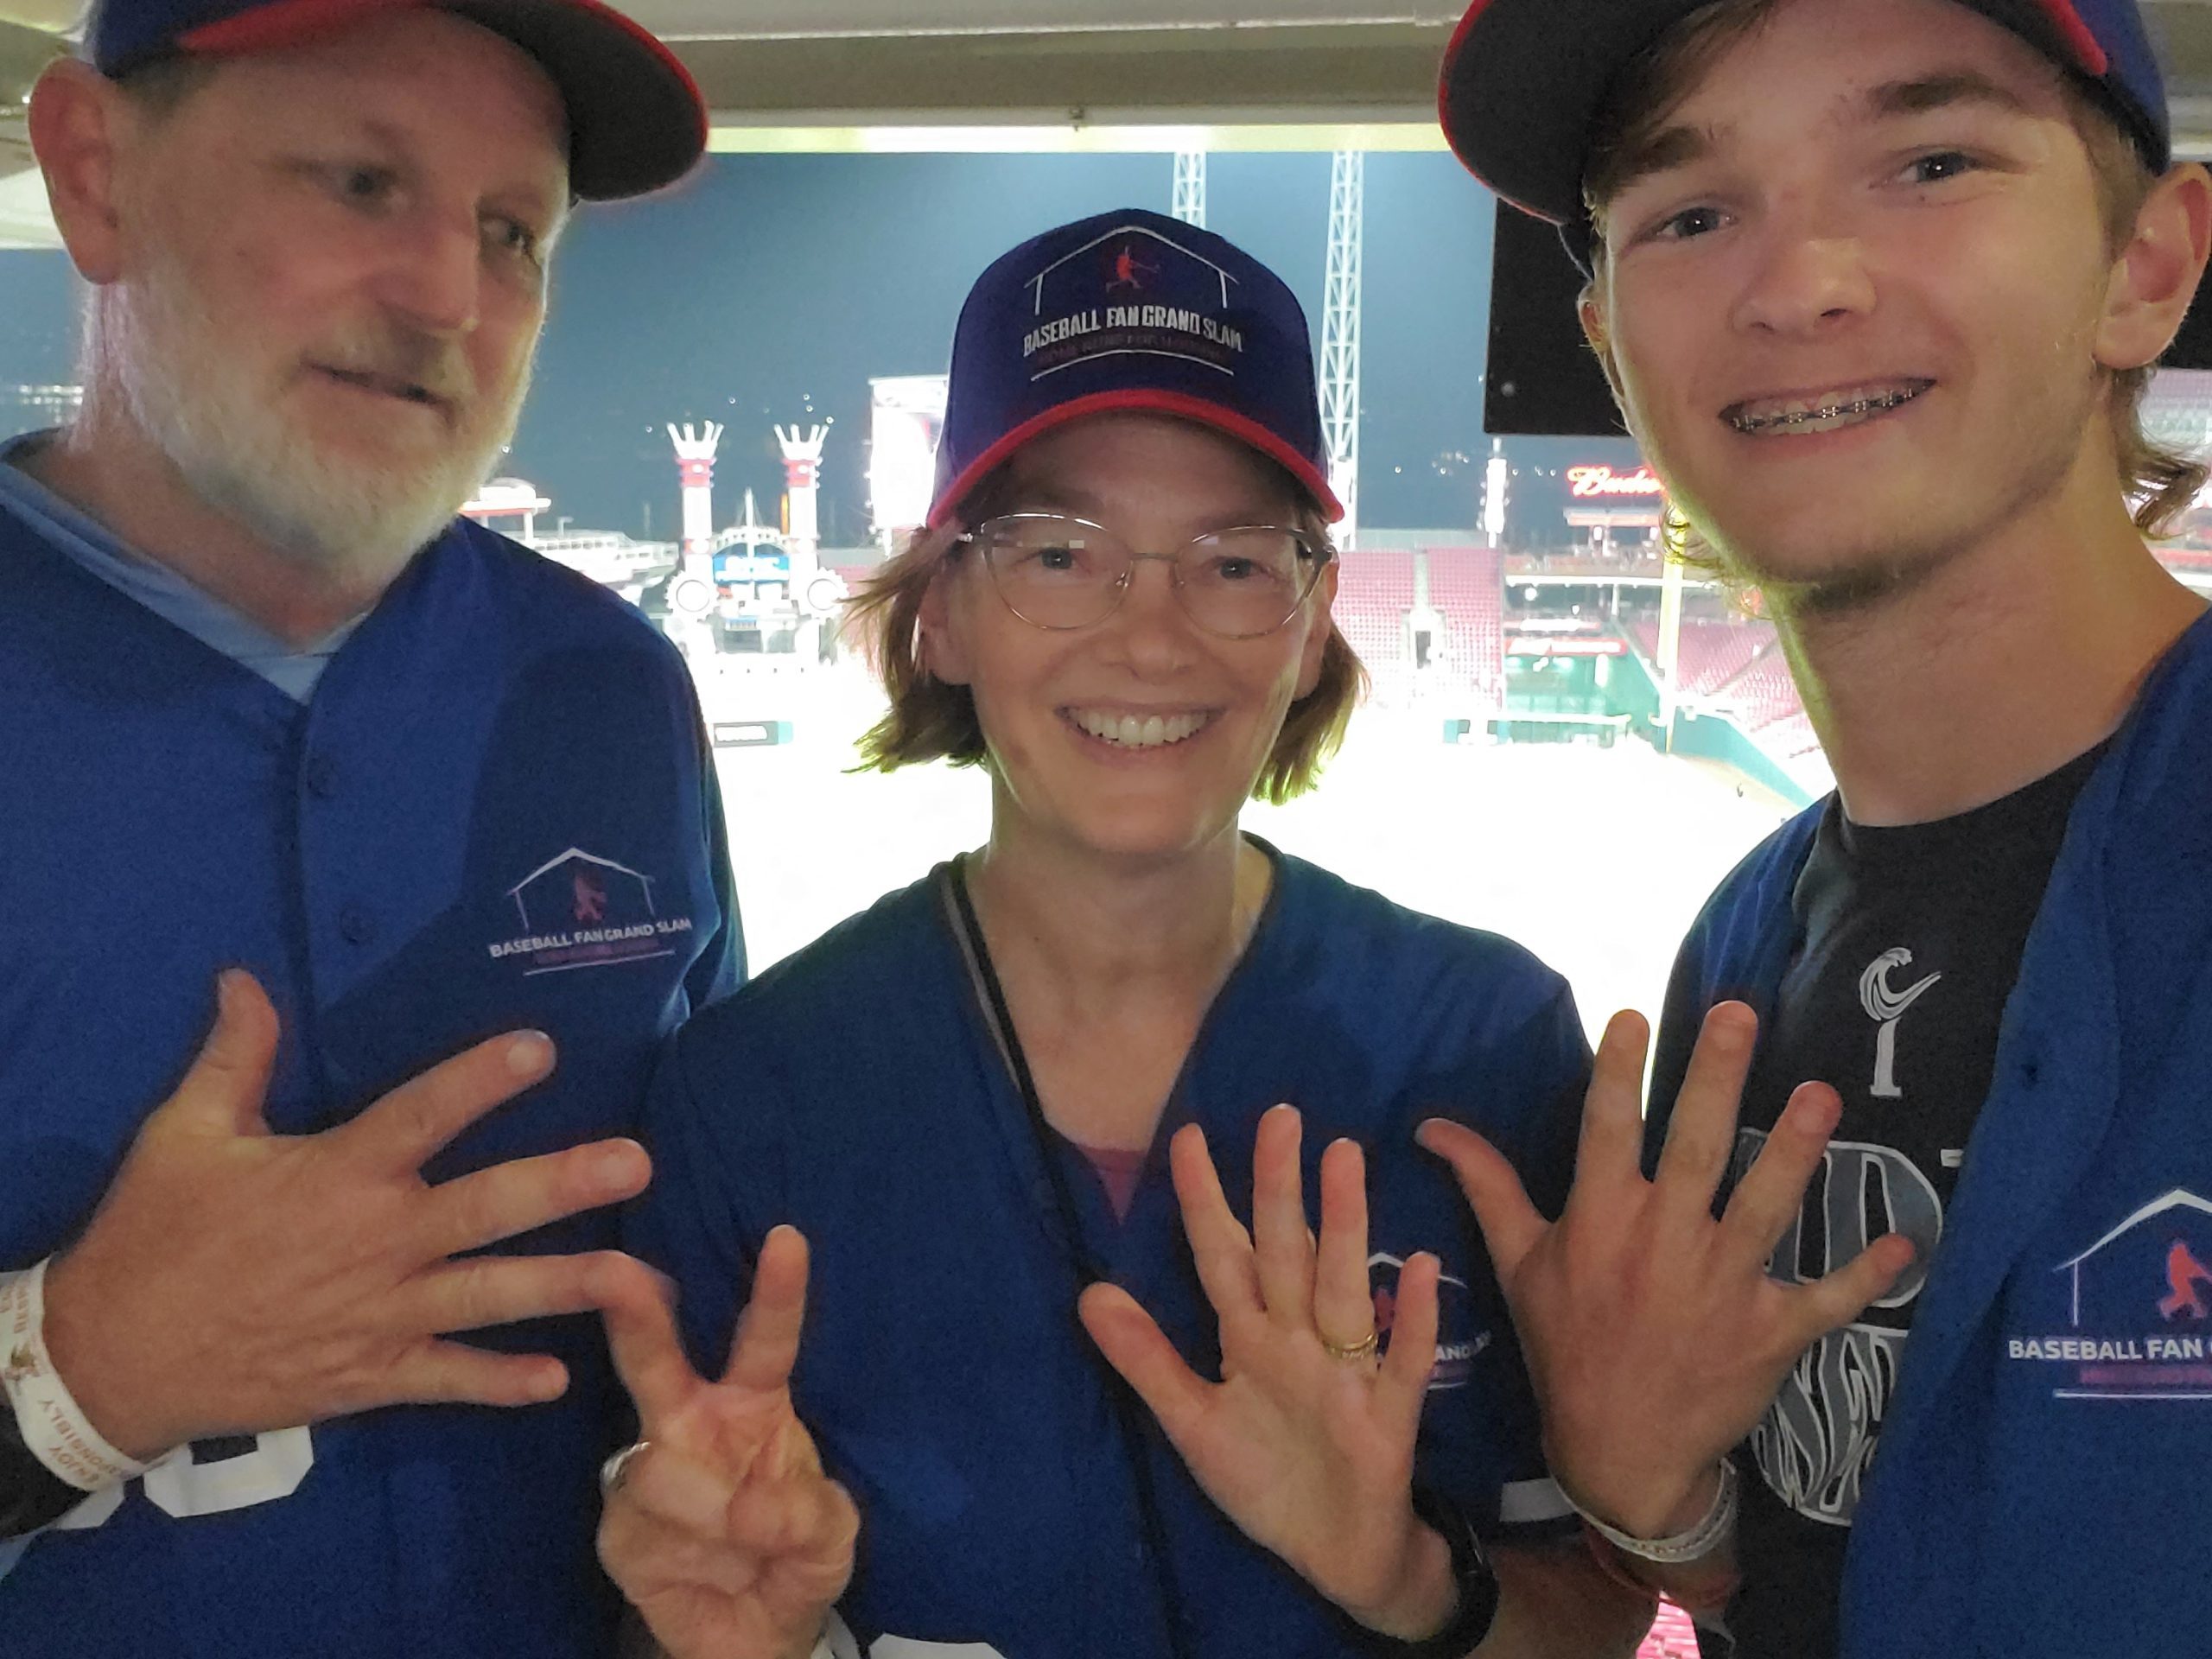 Brad, Heather & Ryan with 17 fingers representing the 17th stadium.